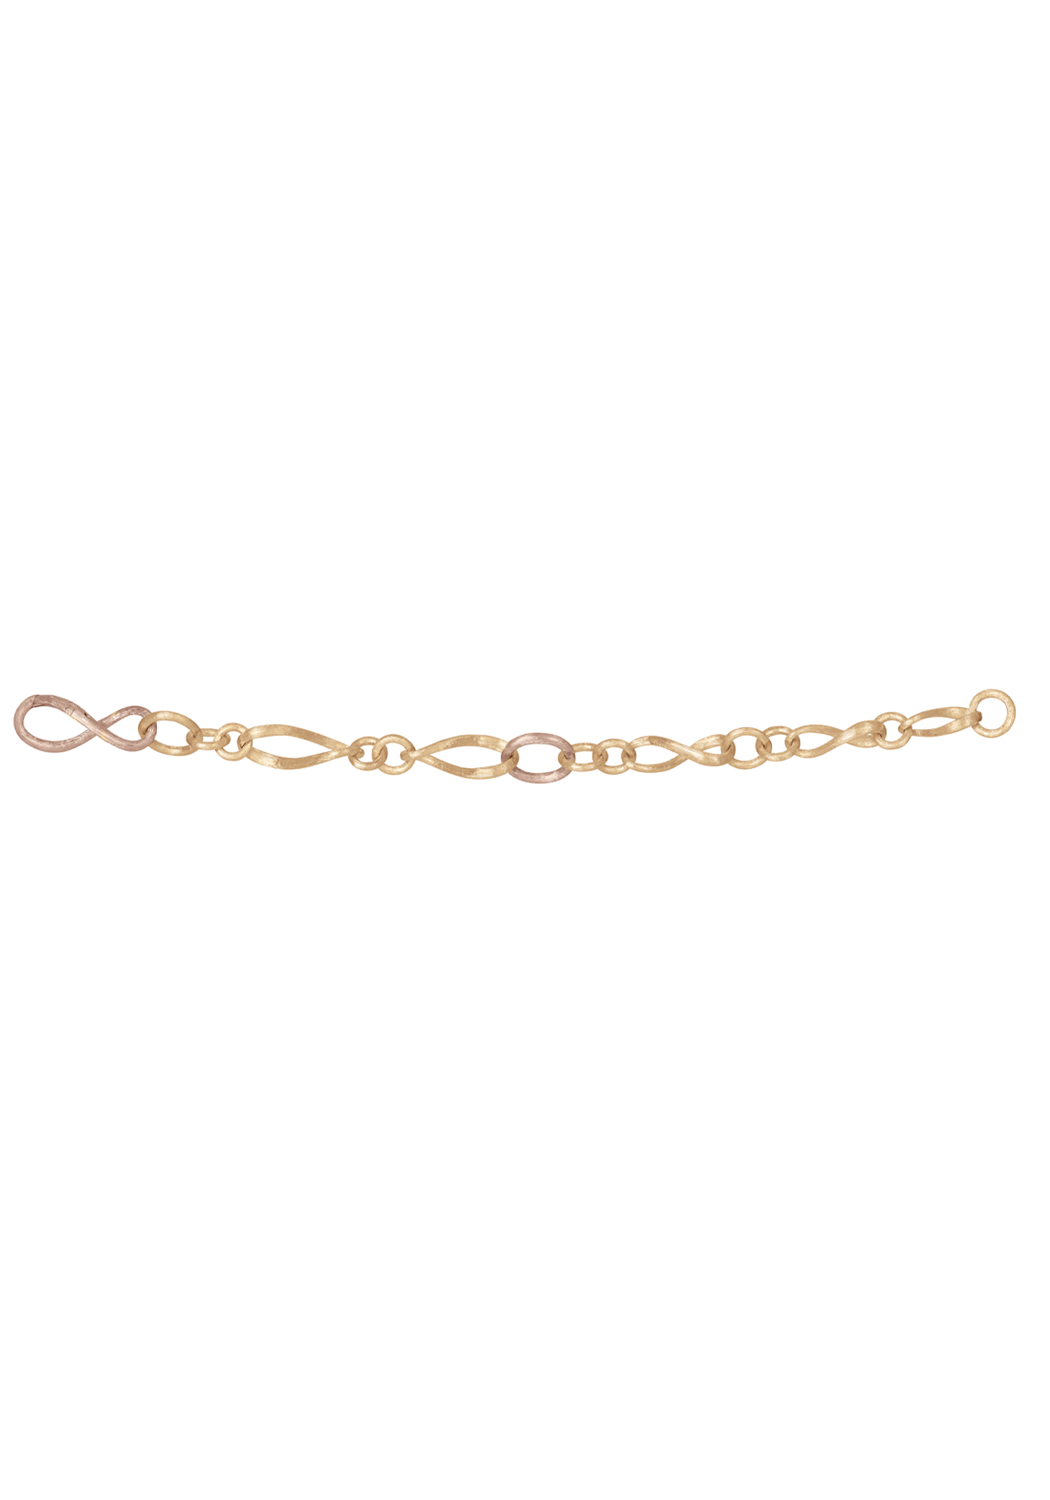 Ole Lynggaard Love 18KYRG Chain Link Bracelet | Small | Ref. A1730-401 | OsterJewelers.com